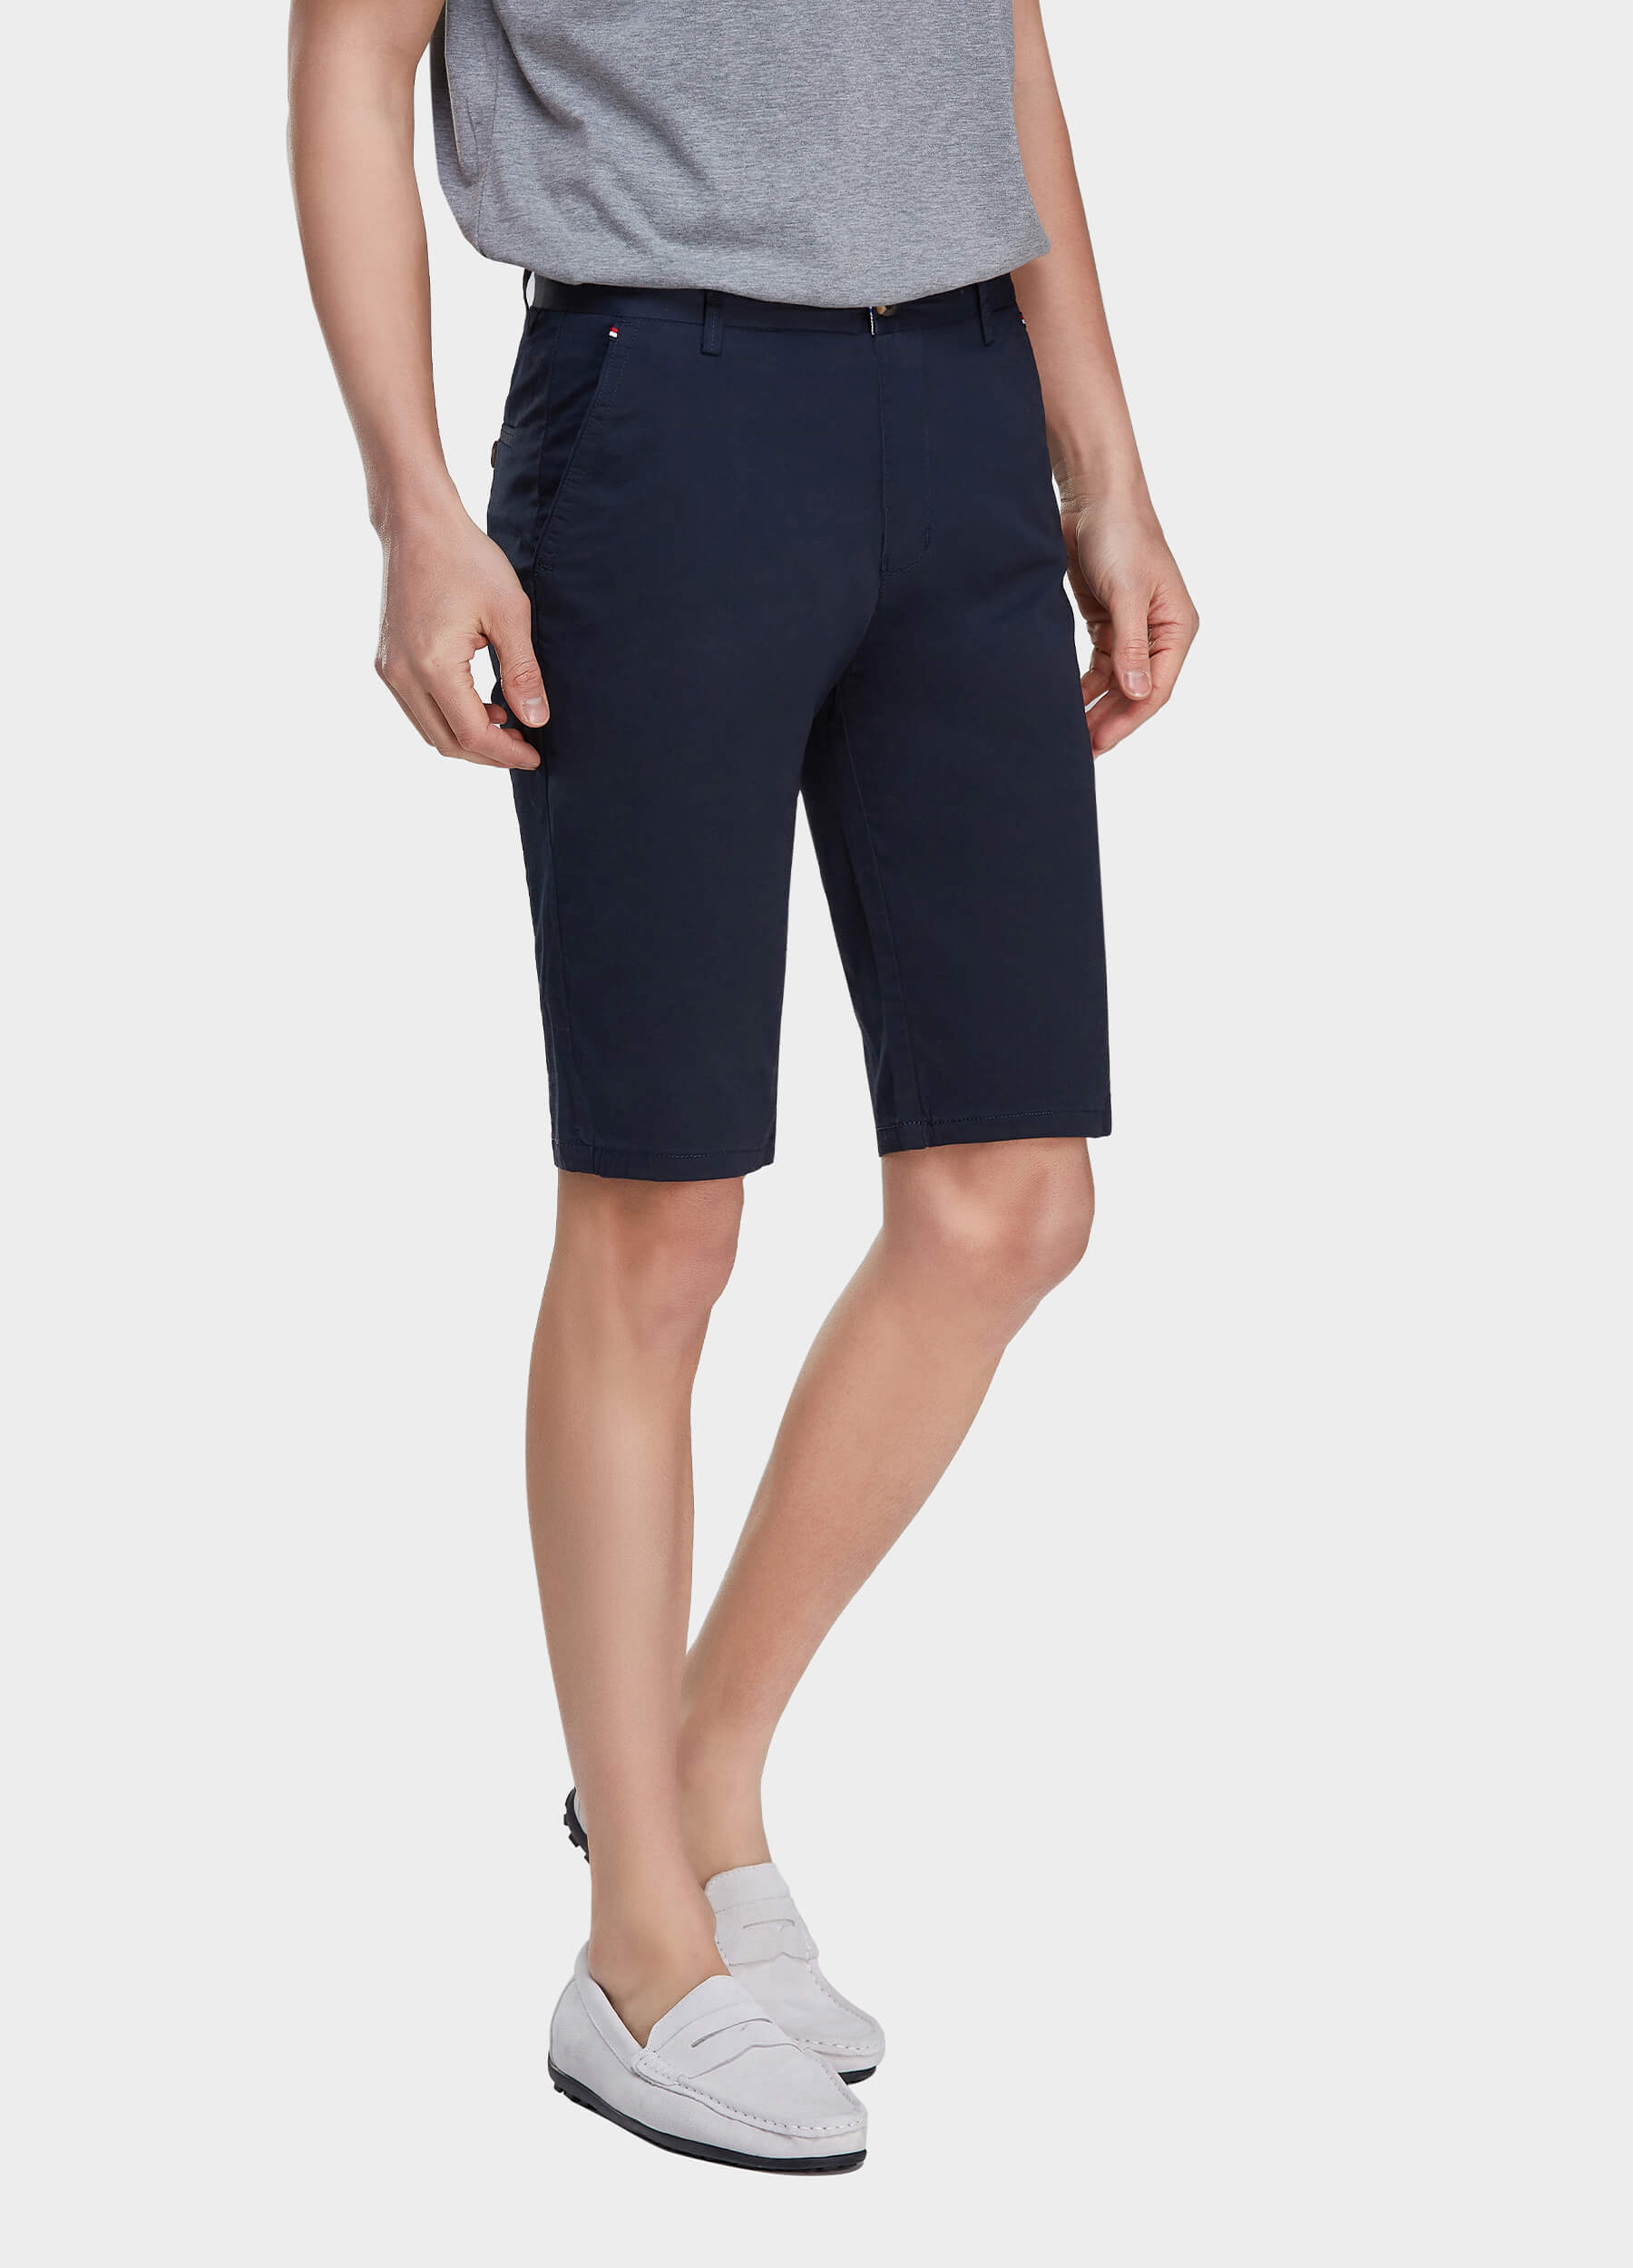 Men's Casual Button Closure Zipper Elasticity Solid Shorts with Slant Pocket-Navy Blue